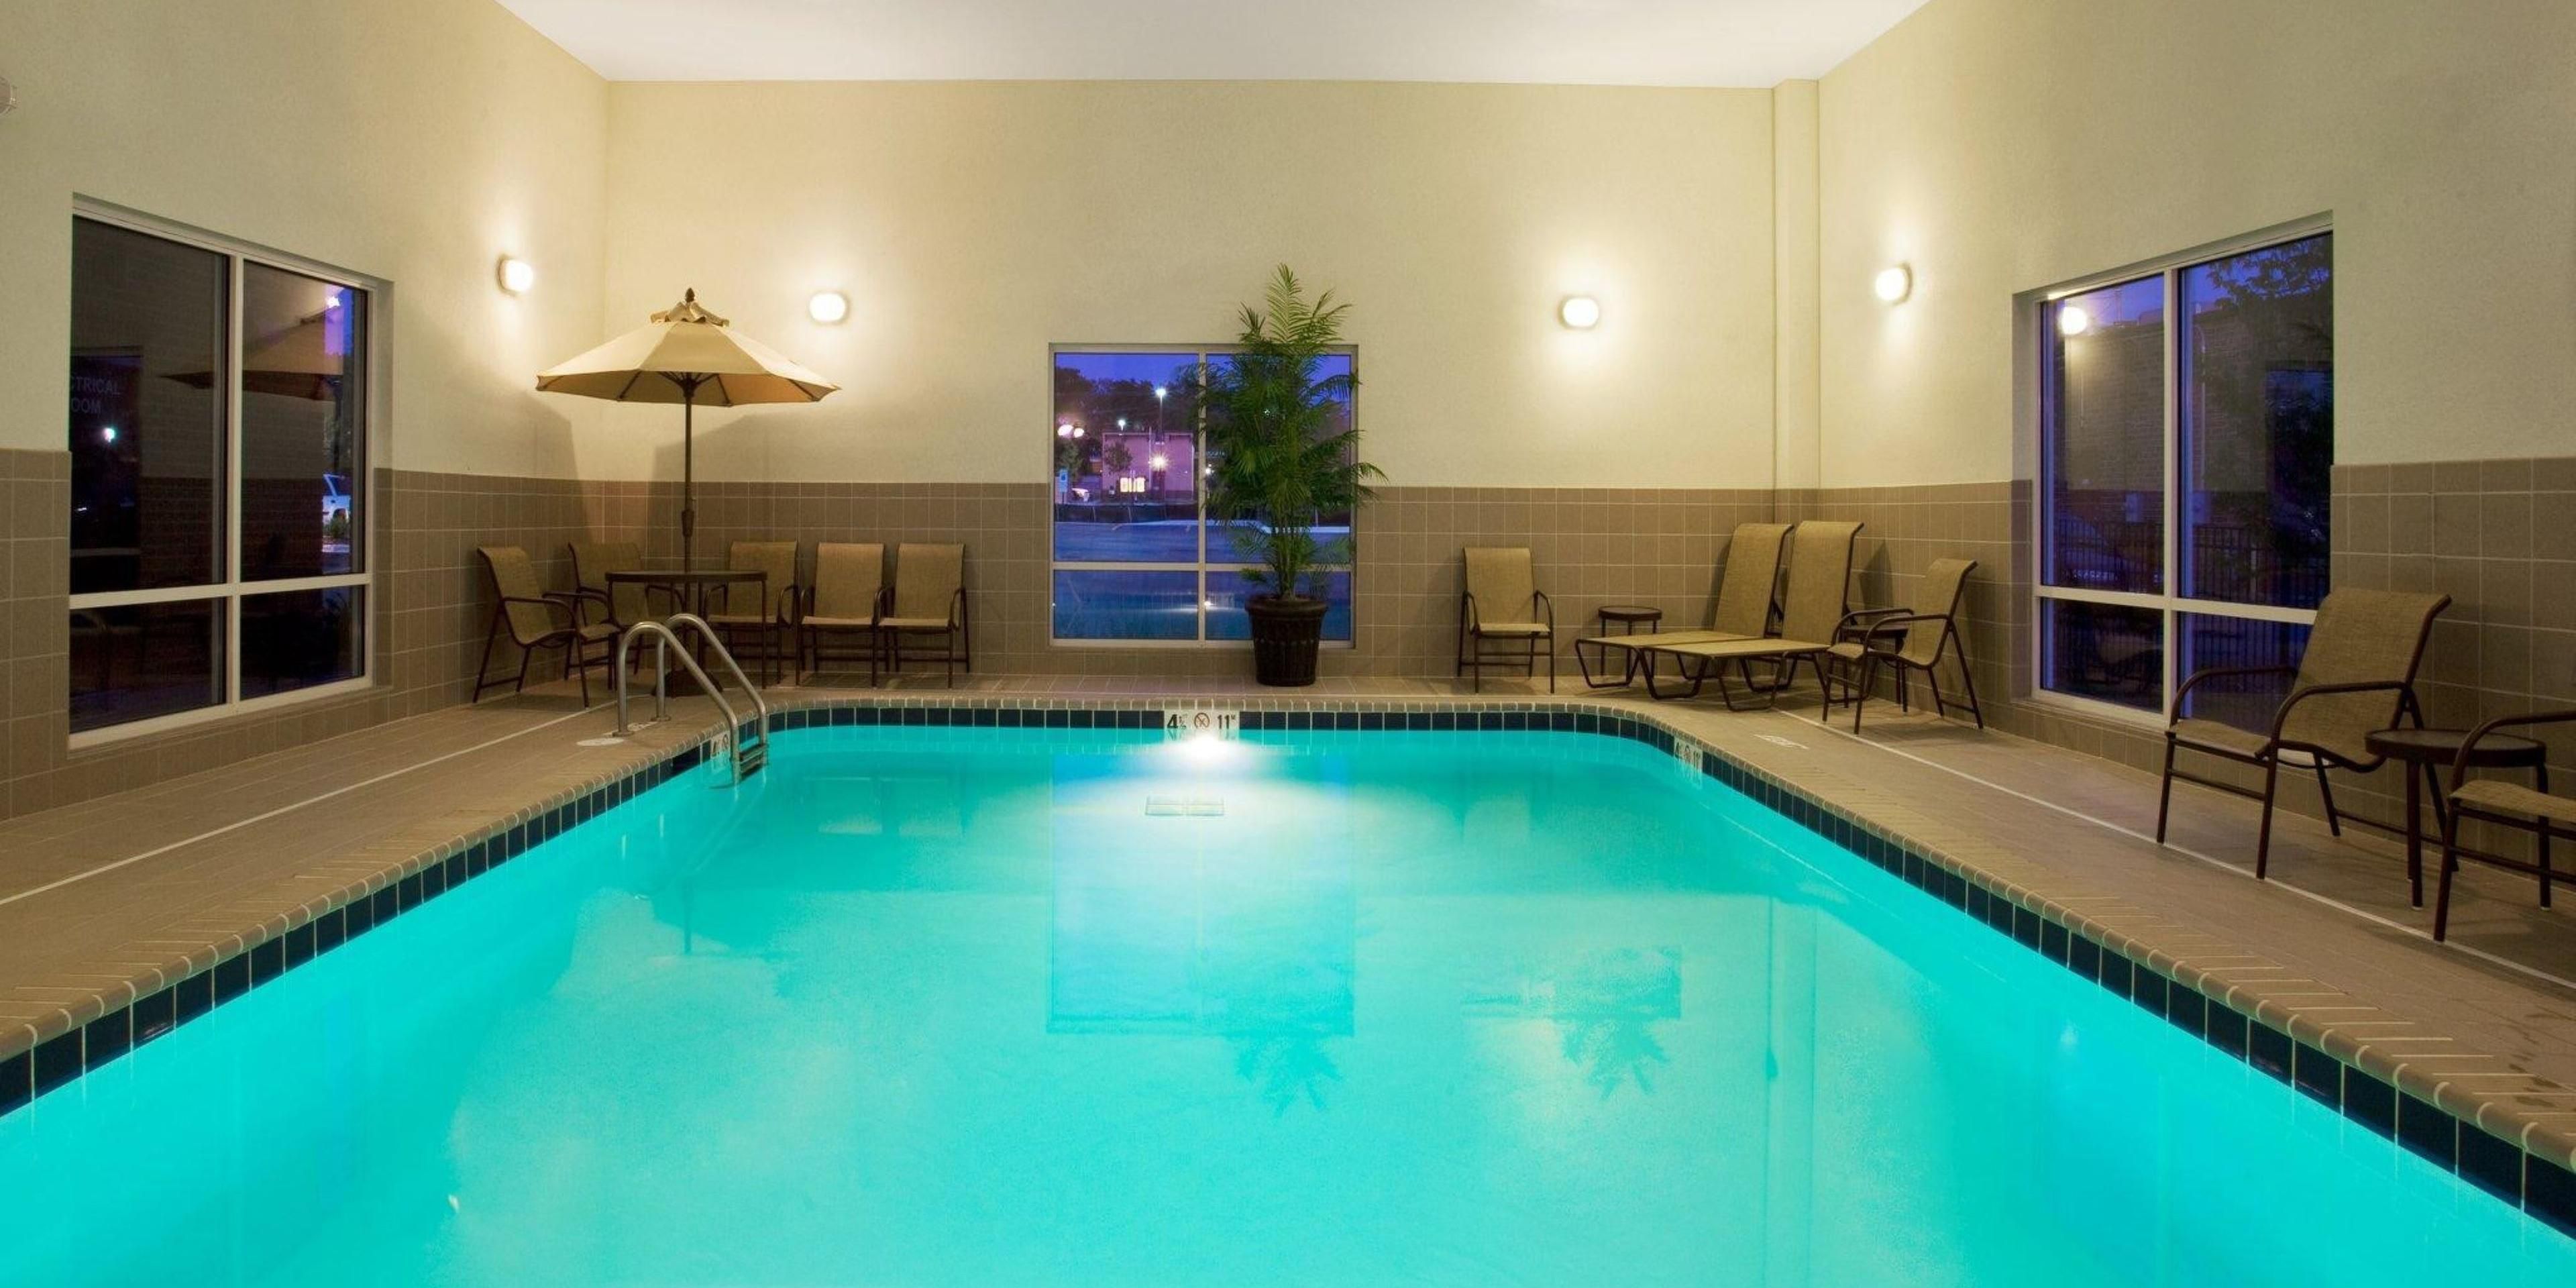 Enjoy a refreshing dip in our indoor pool.